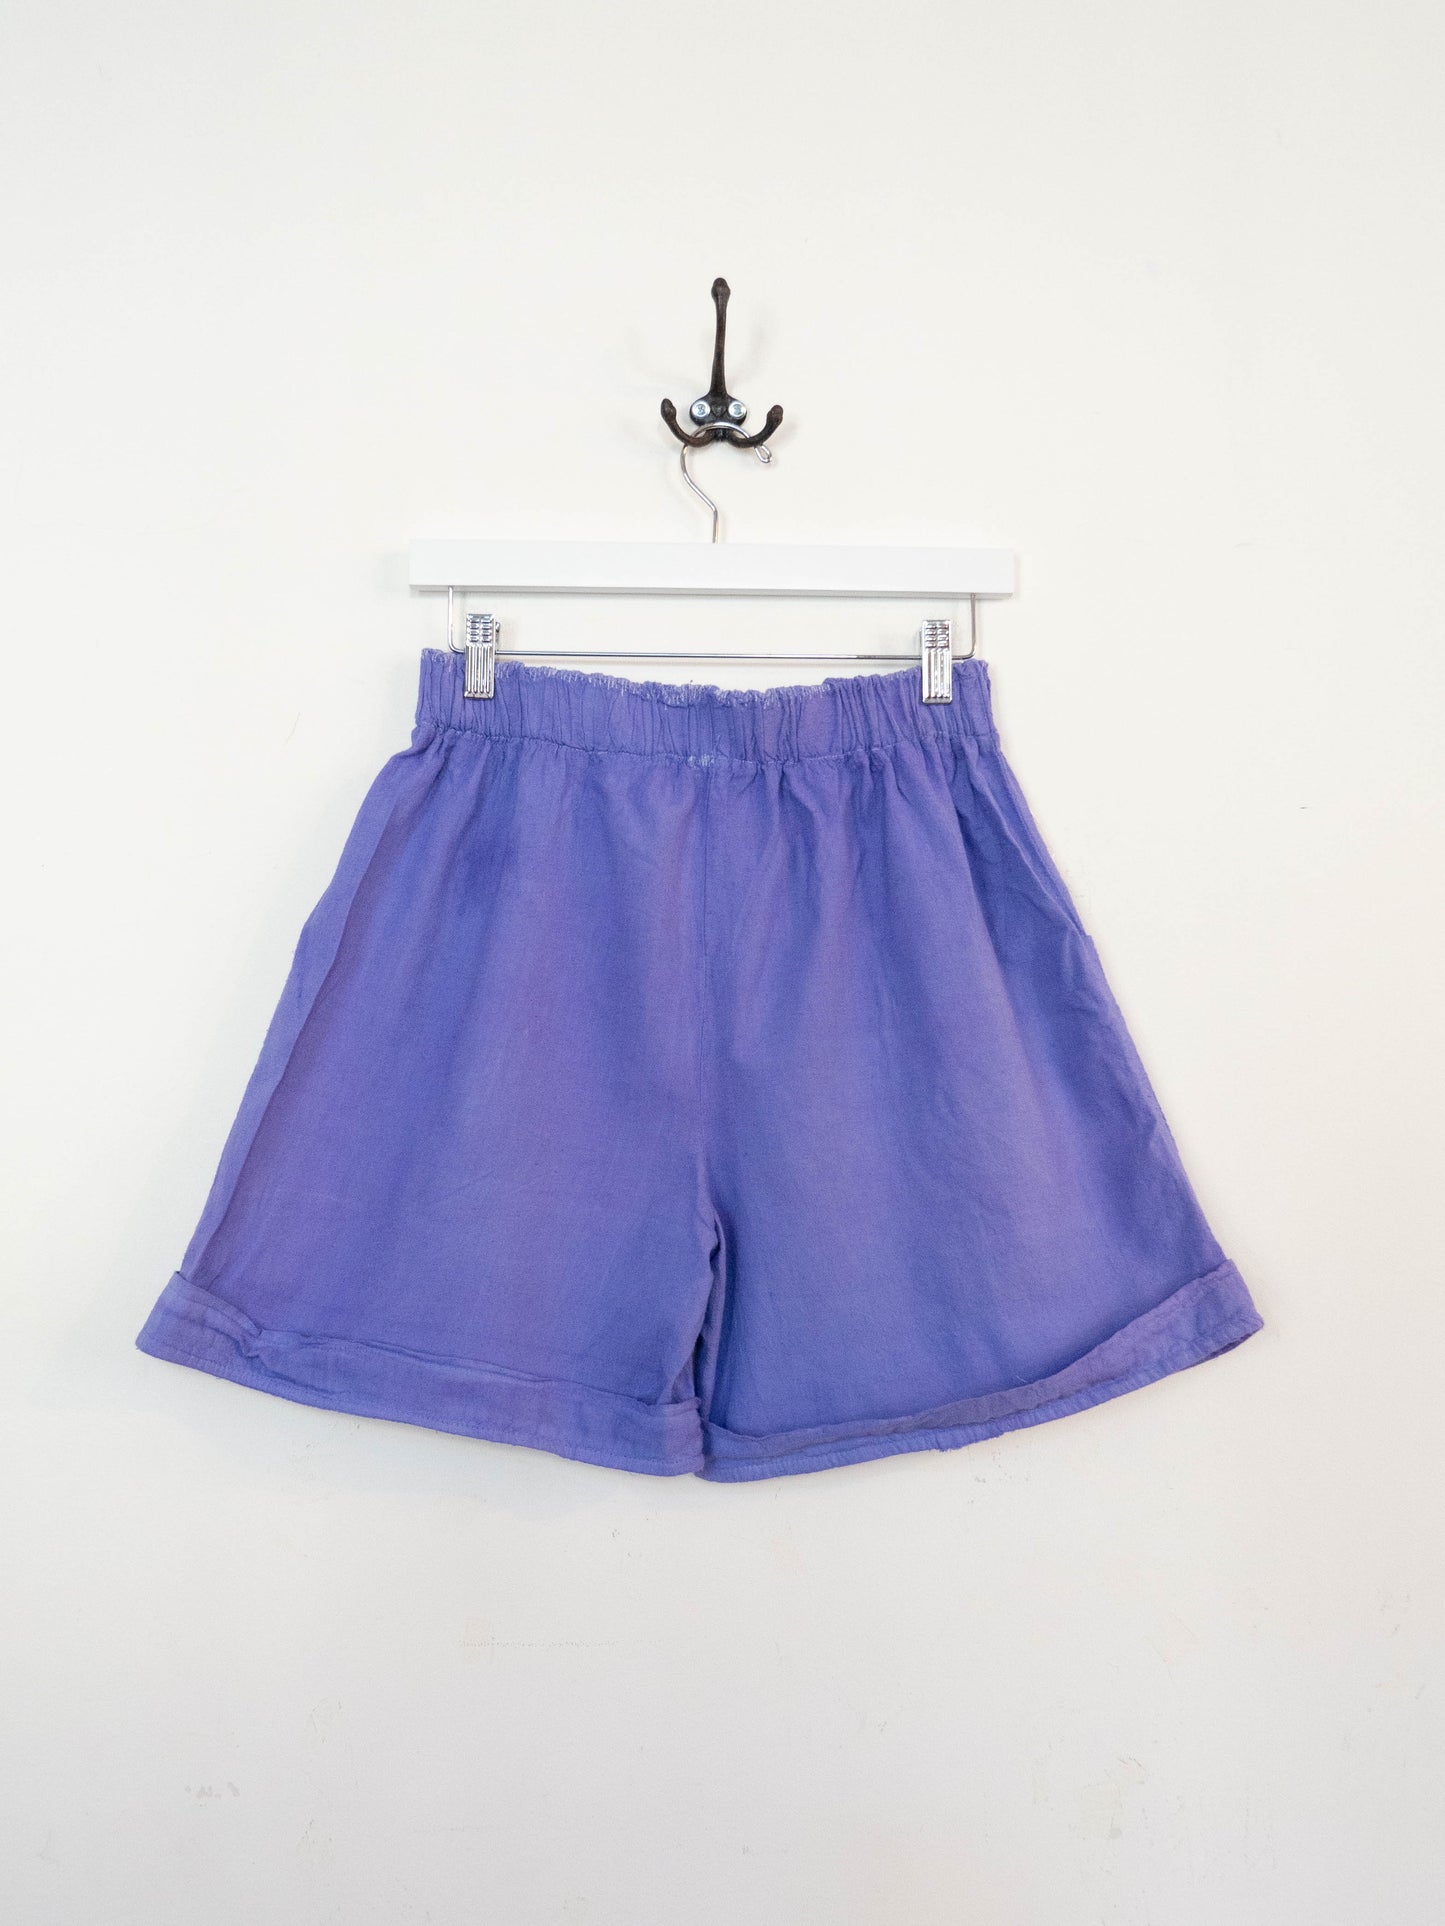 Deadstock Cotton/Linen Elastic Waist Shorts - Lilac (XS)